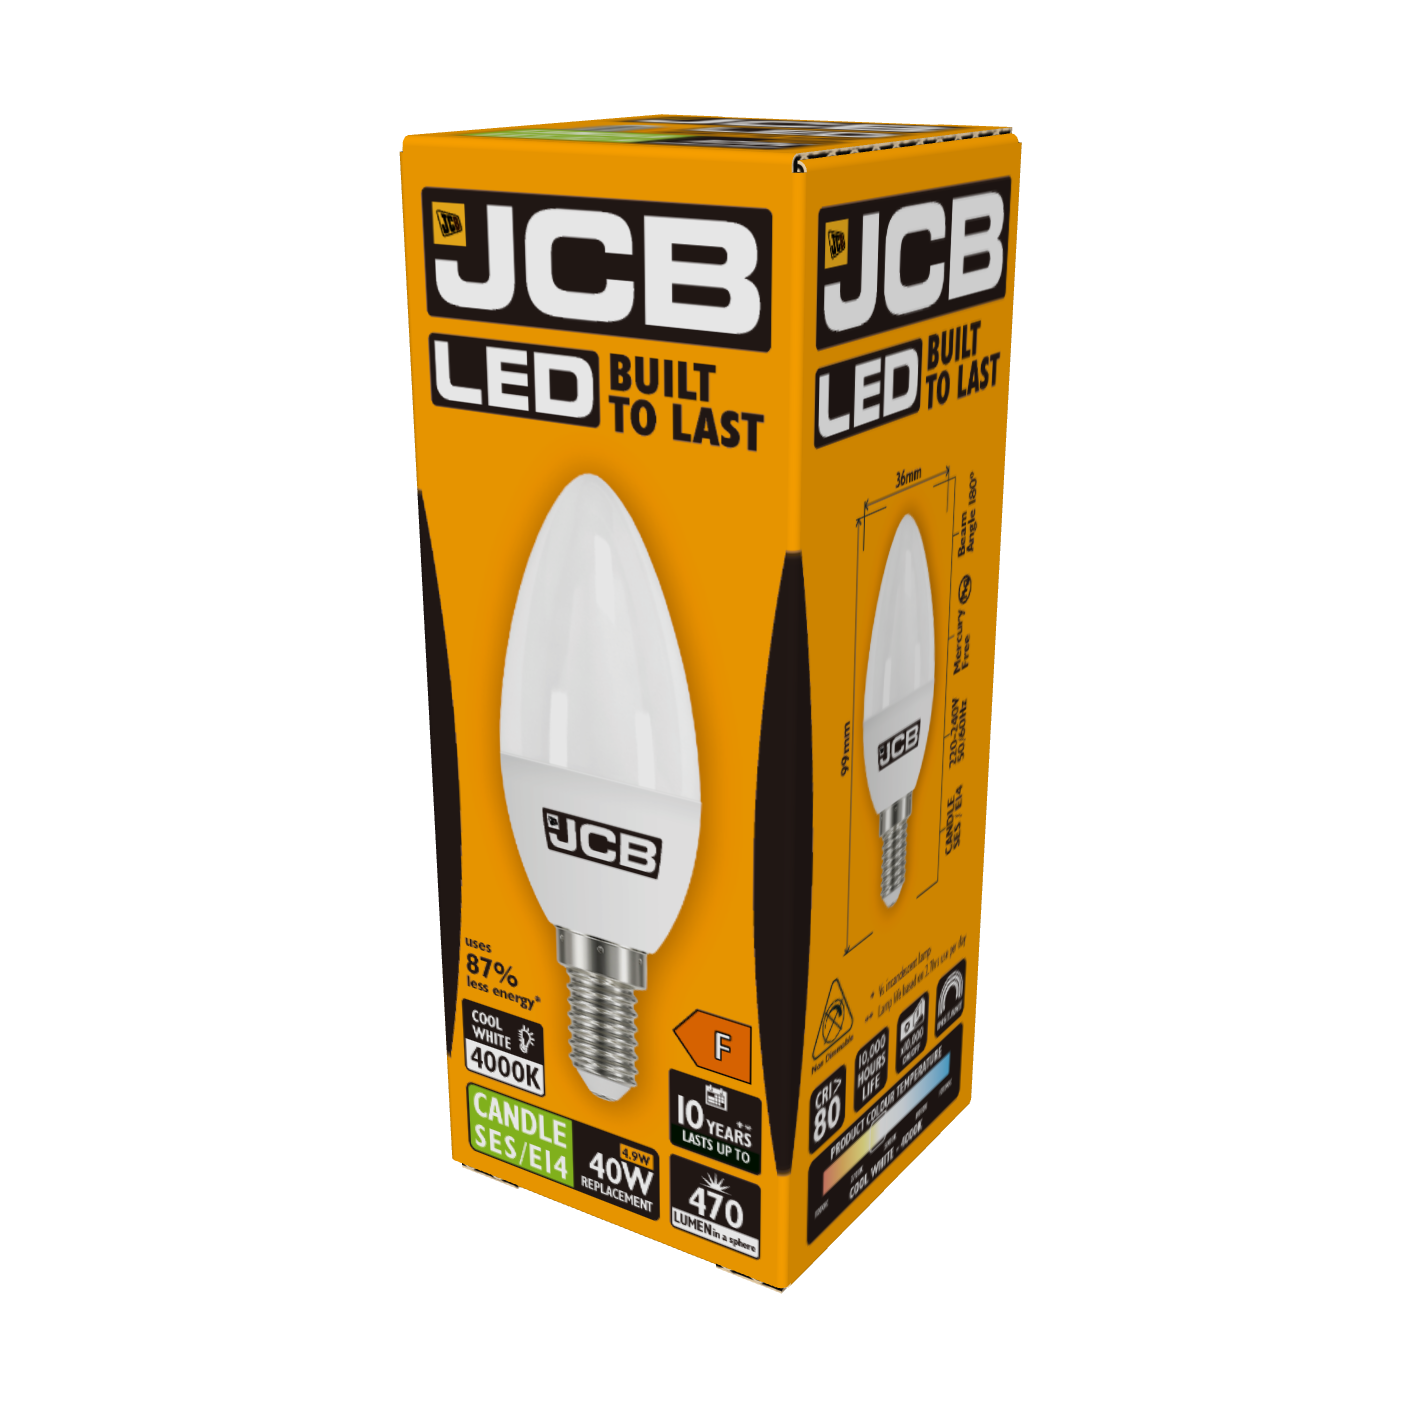 JCB LED Candle E14 (SES) 470lm 4.9W 4,000K (Cool White), Box of 1